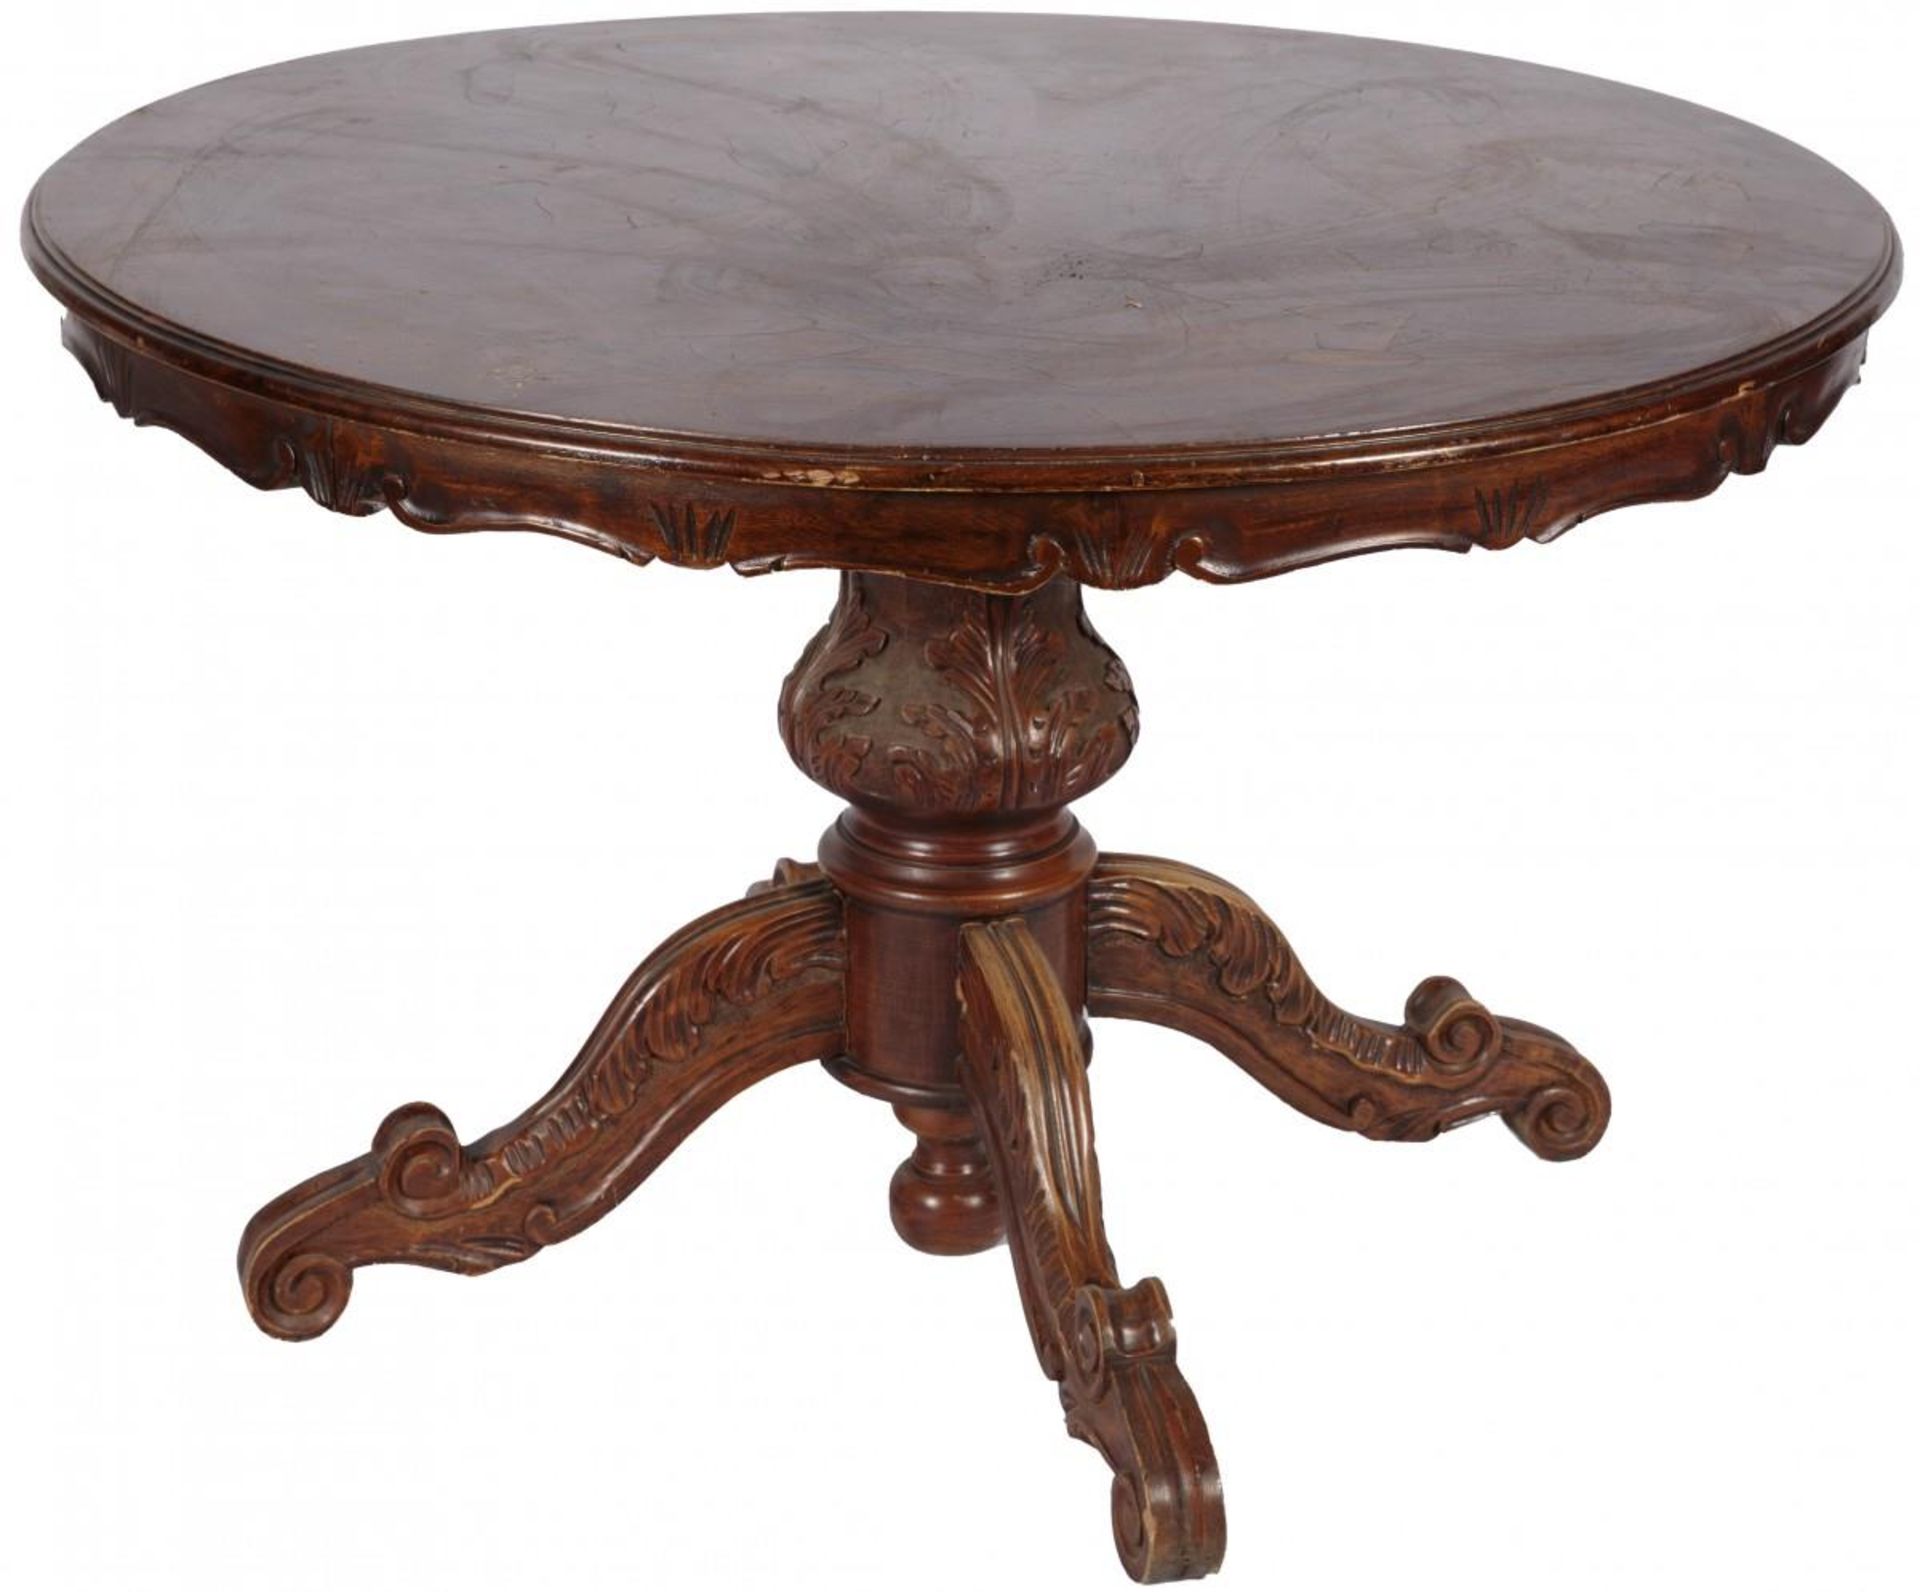 A Willem III / Victorian mahogany veneered centre table, Dutch, 20th century.